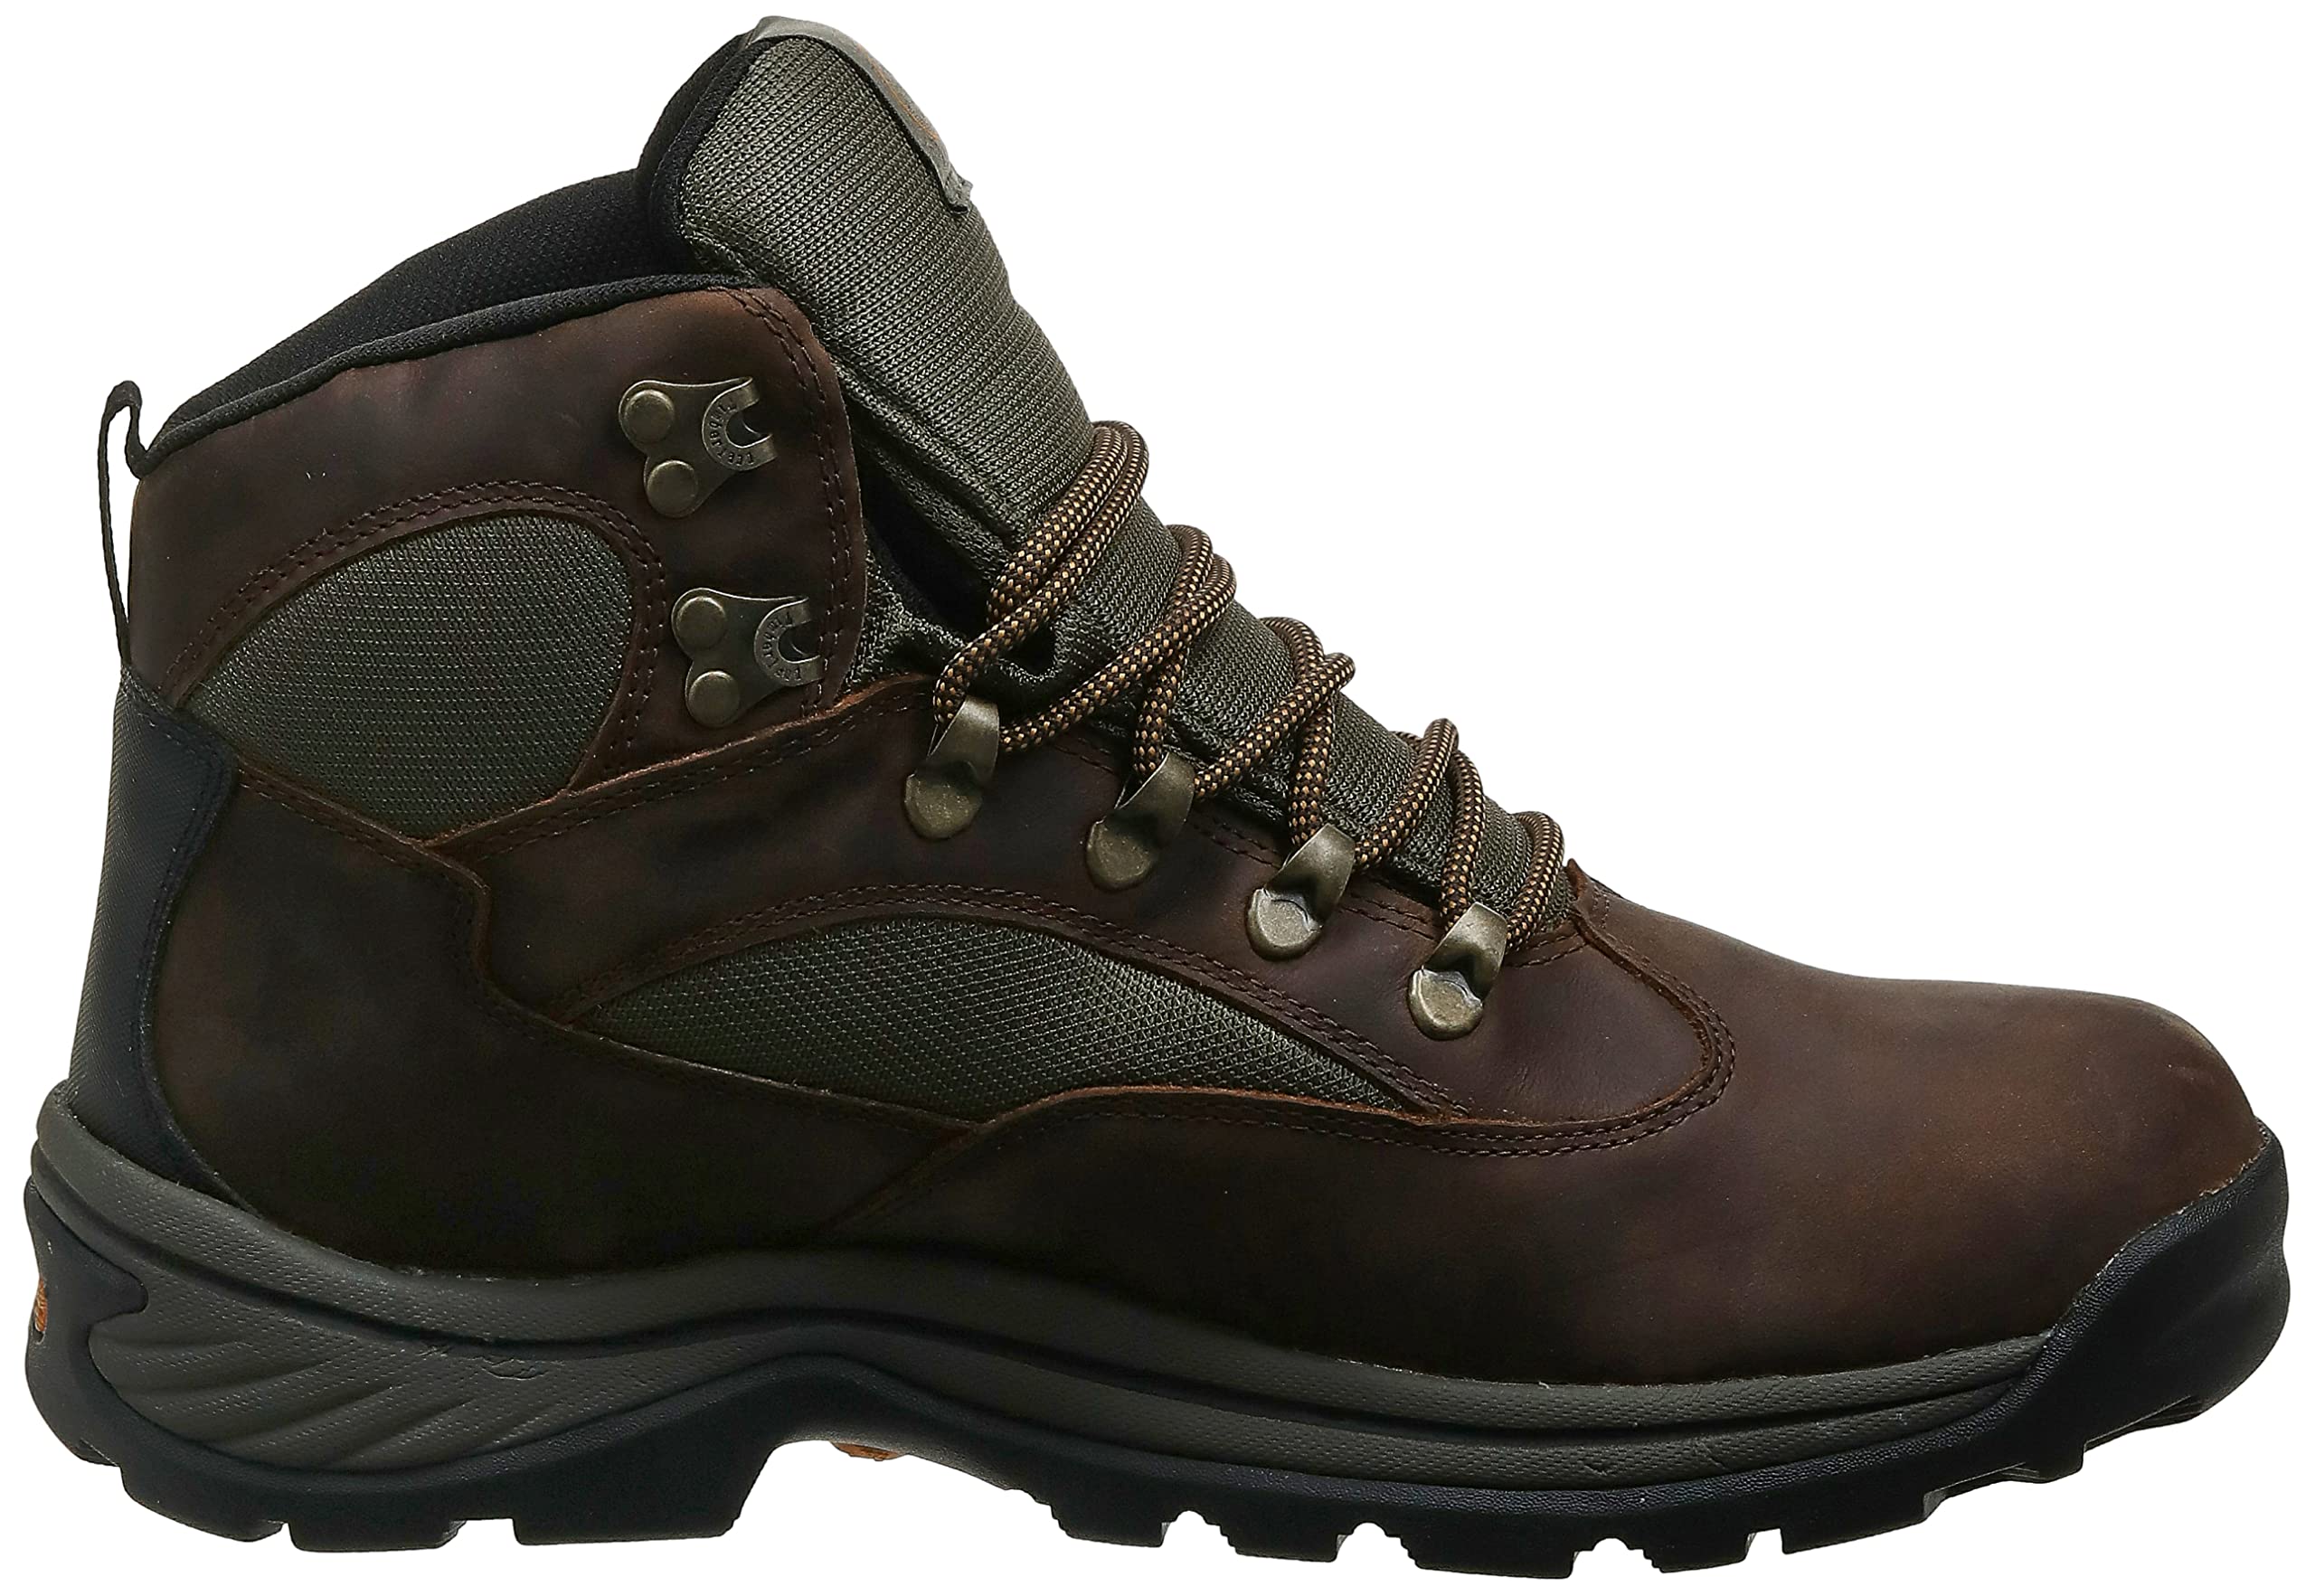 Timberland Men's Chocorua Trail Gore-tex Mid Hiking Boot